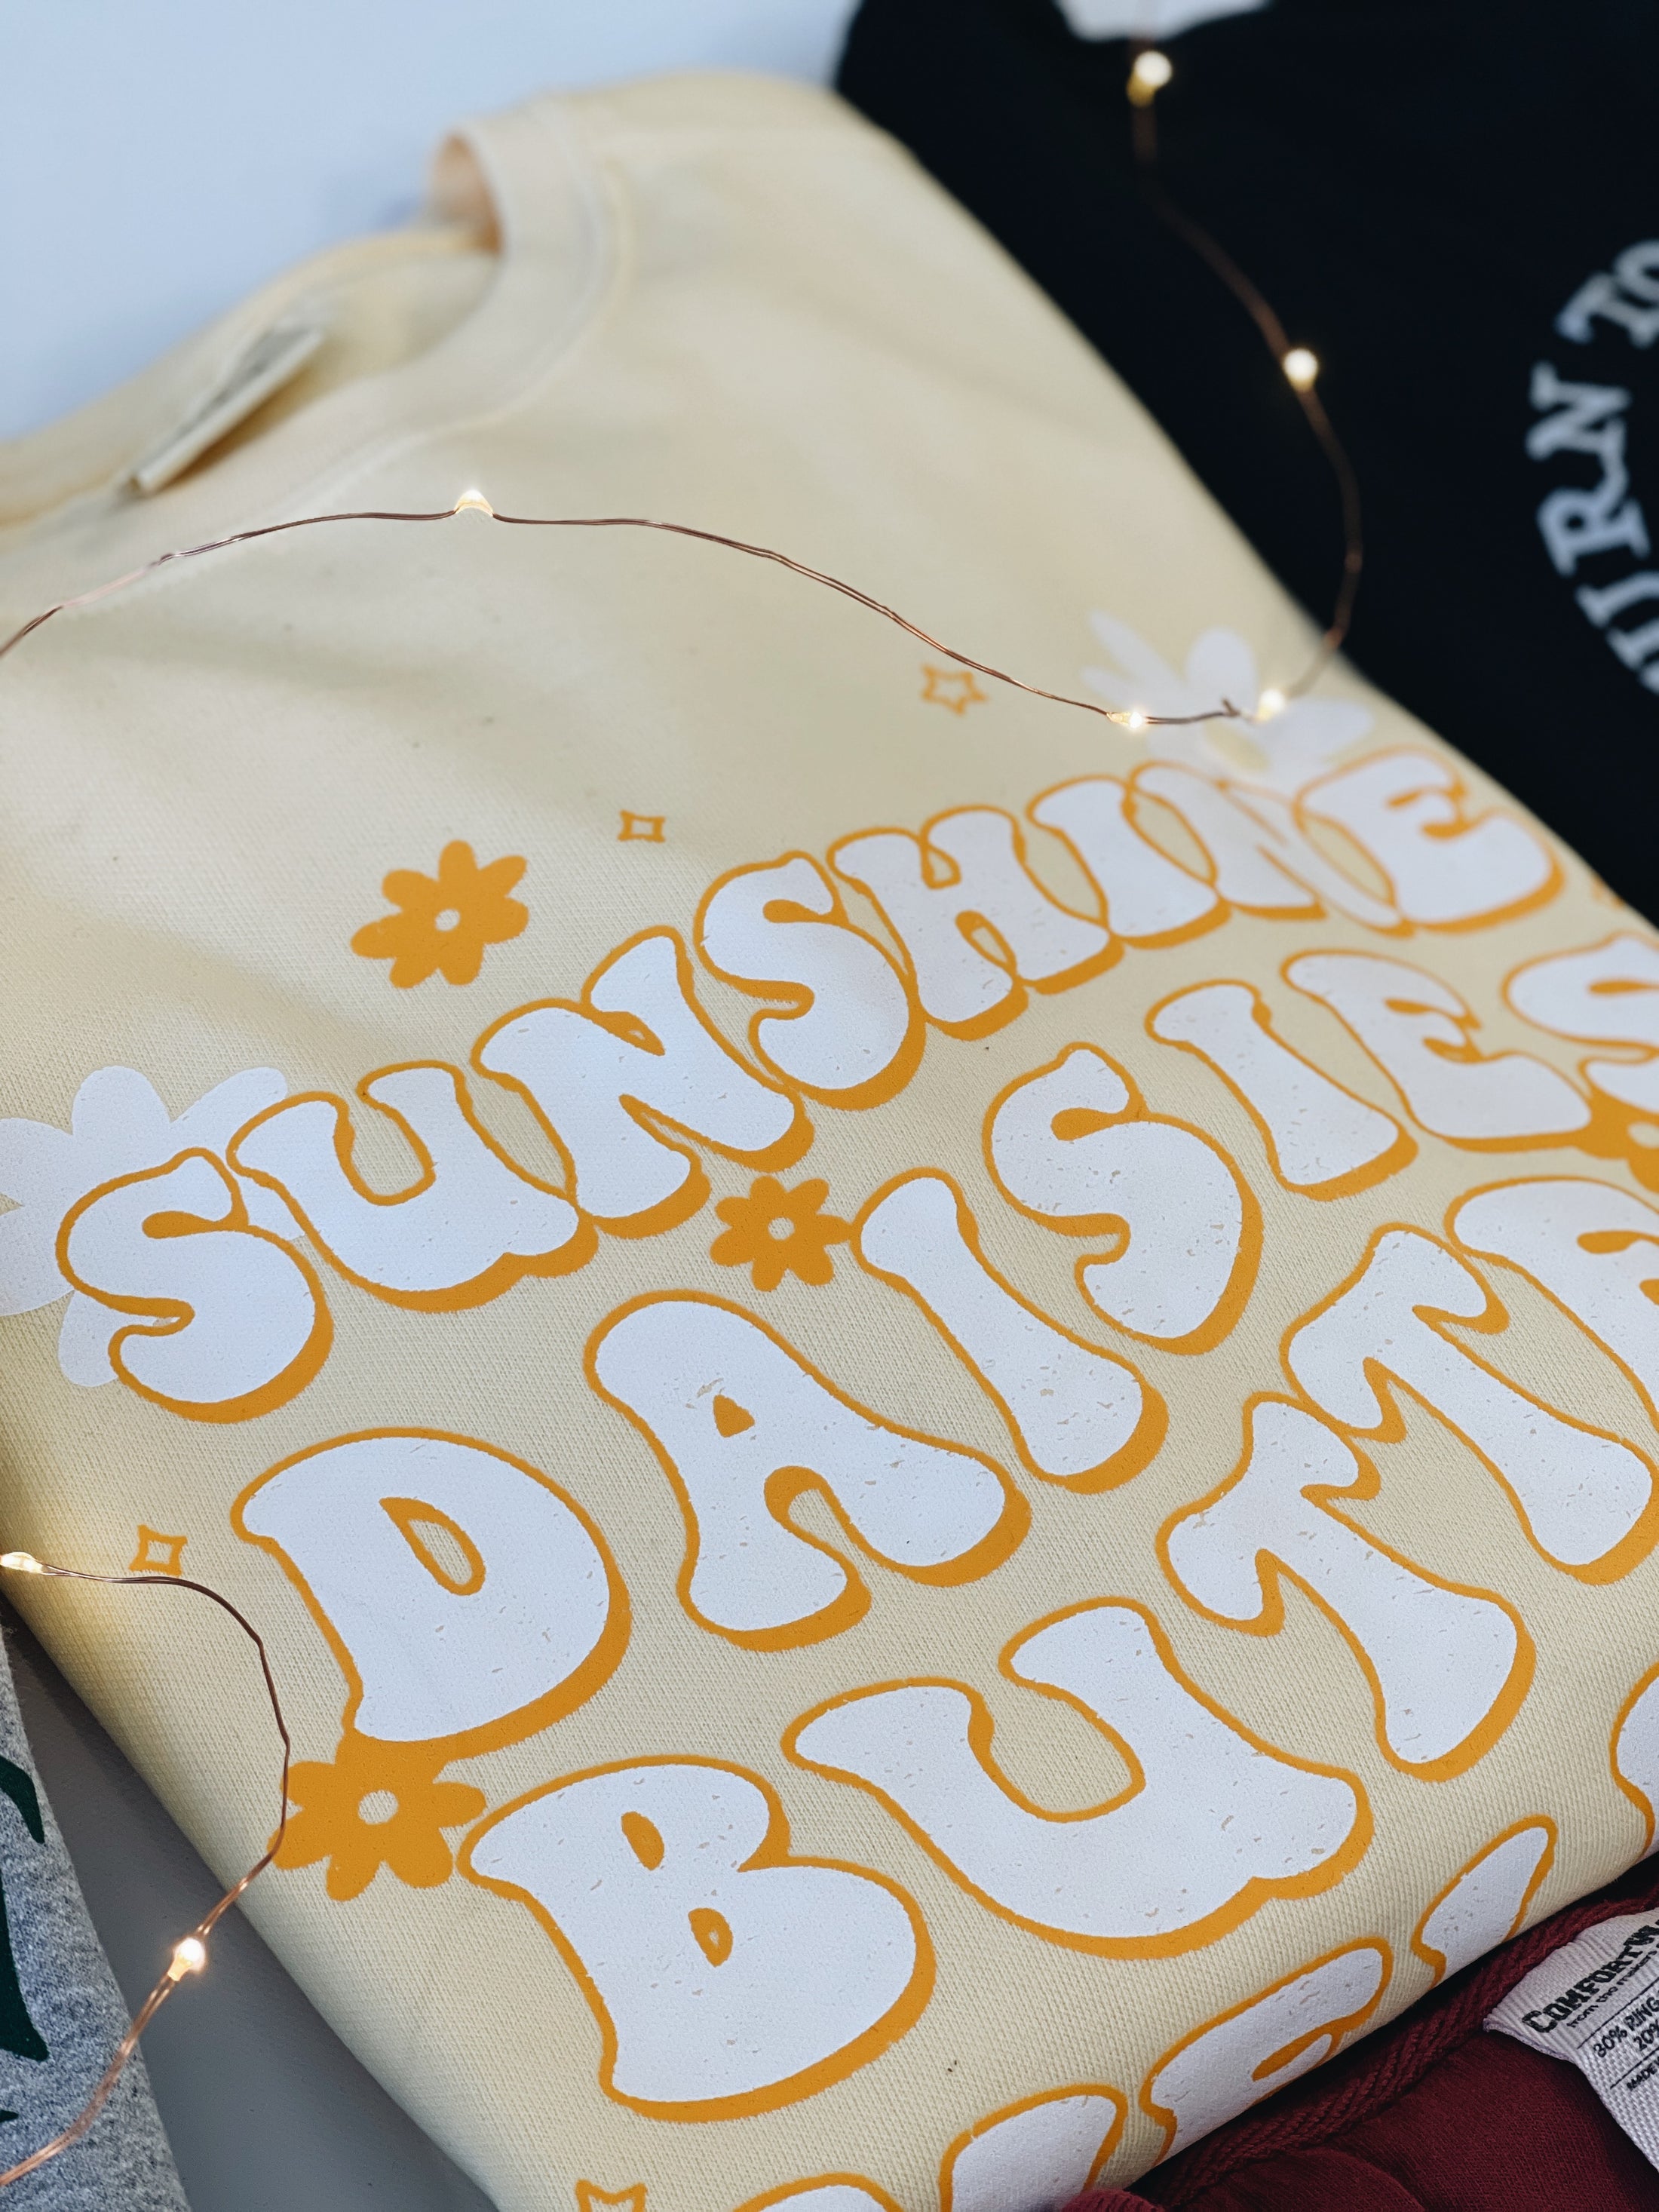 Sunshine Daisies Butter Mellow Graphic Sweatshirt